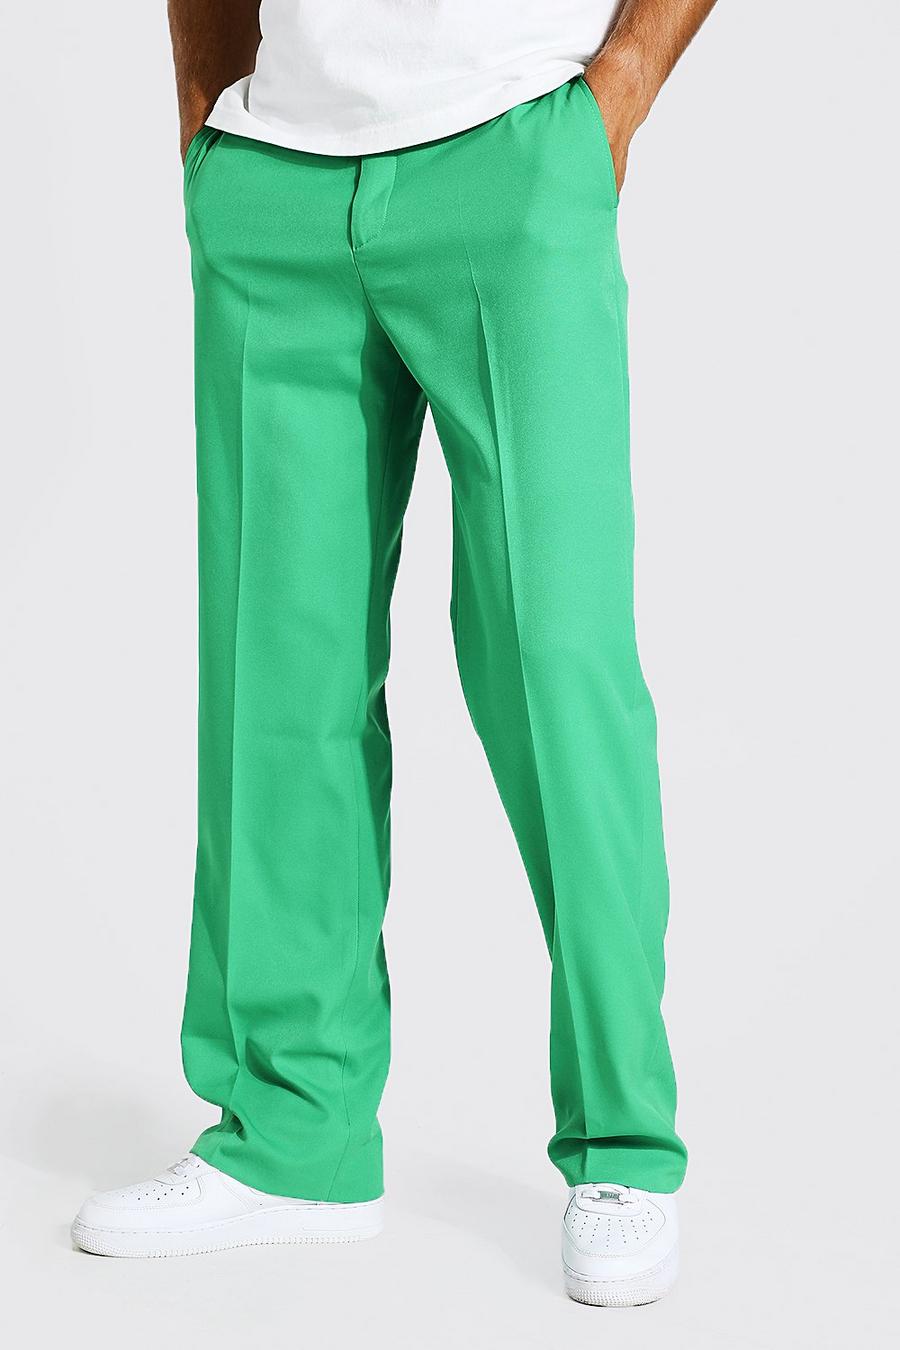 Pantaloni dritti Tall, Green verde